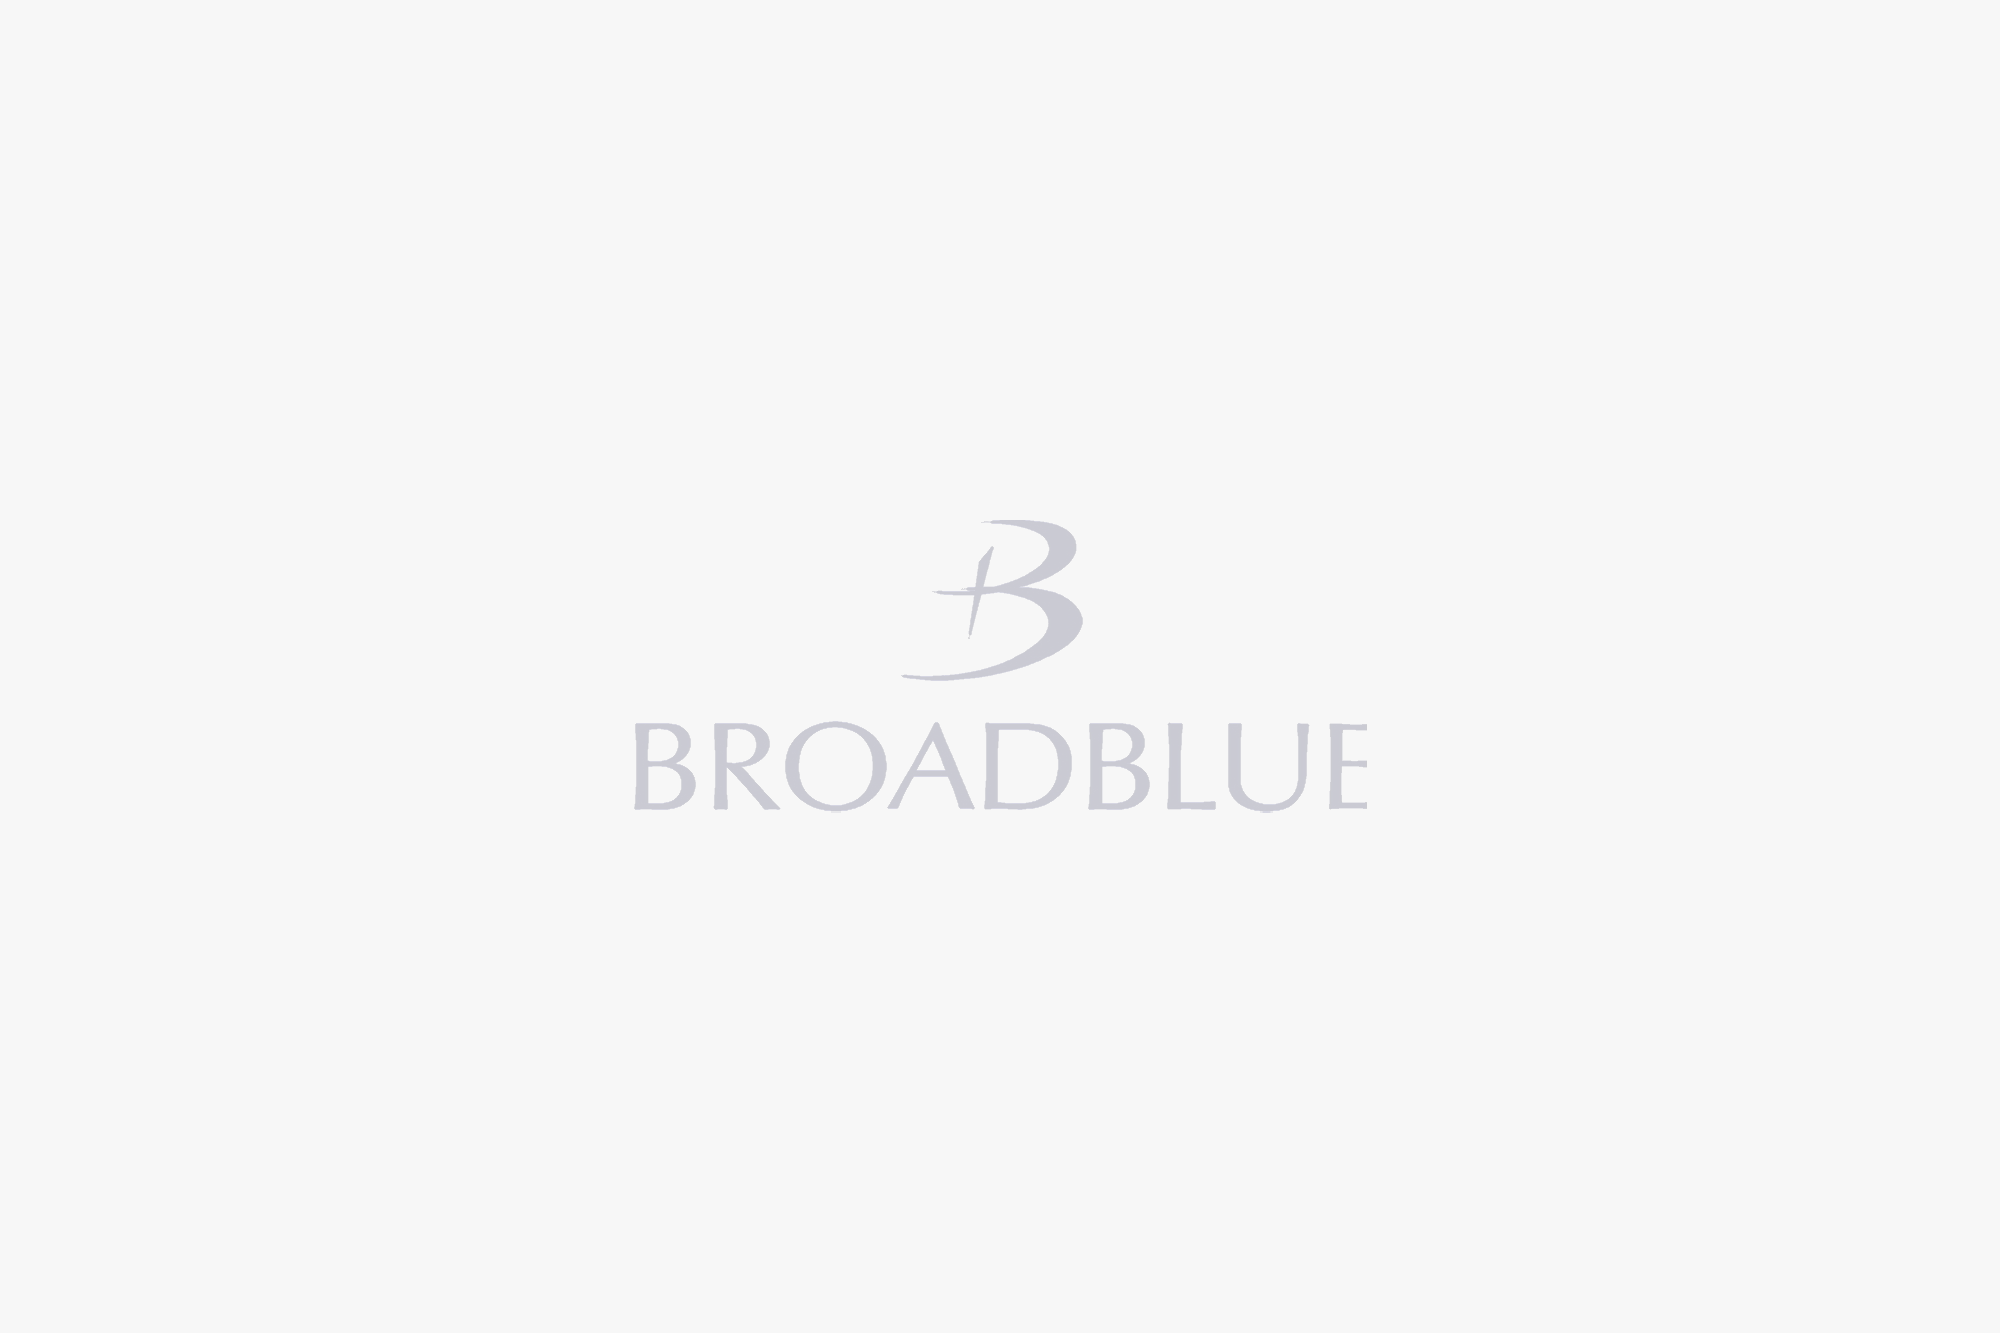 Broadblue 346 makes its European debut